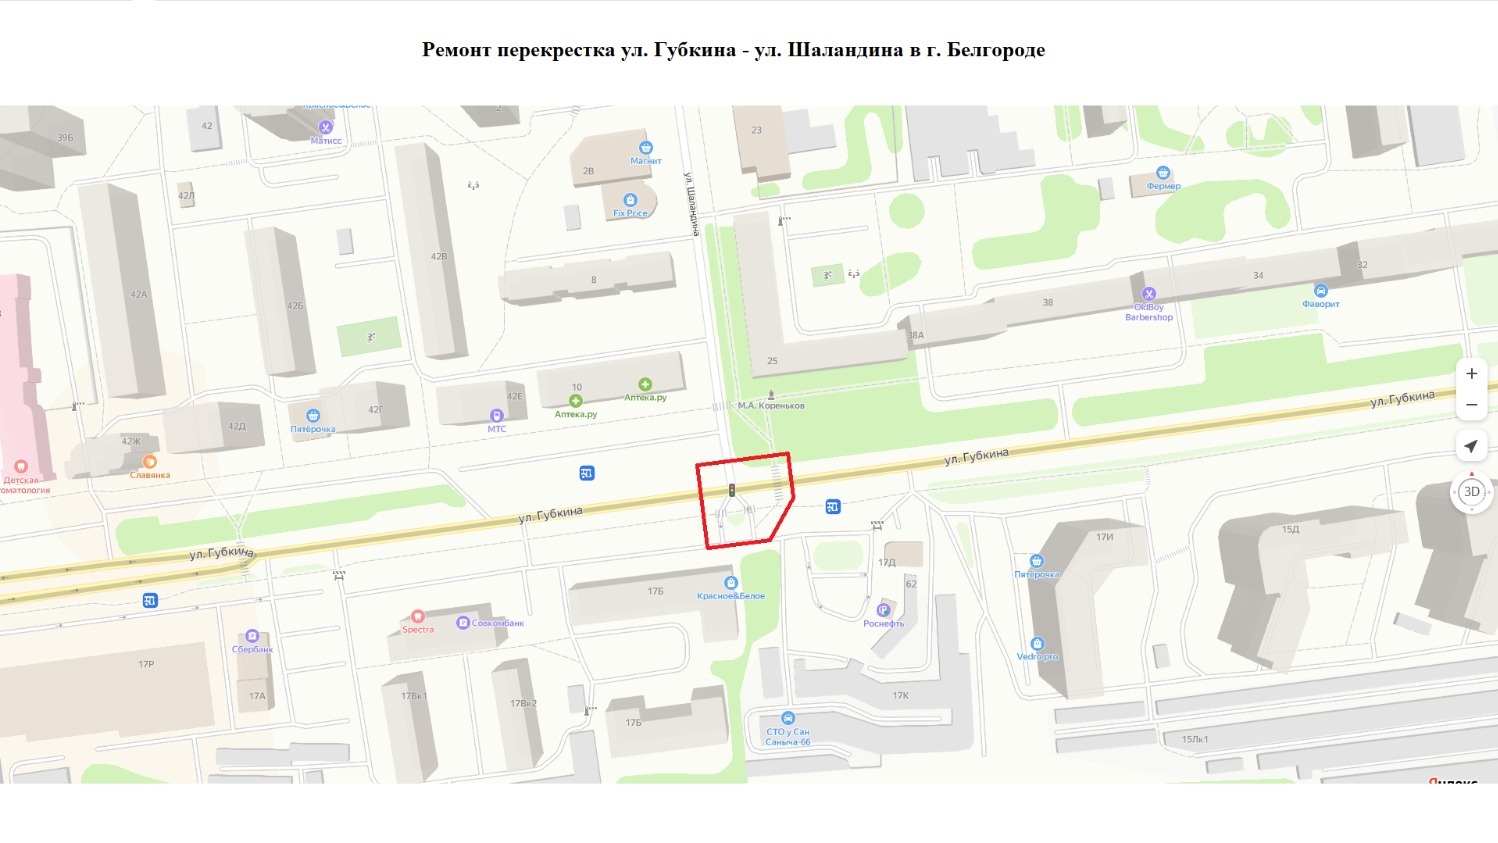 В Белгороде отремонтируют перекрёсток Губкина — Шаландина